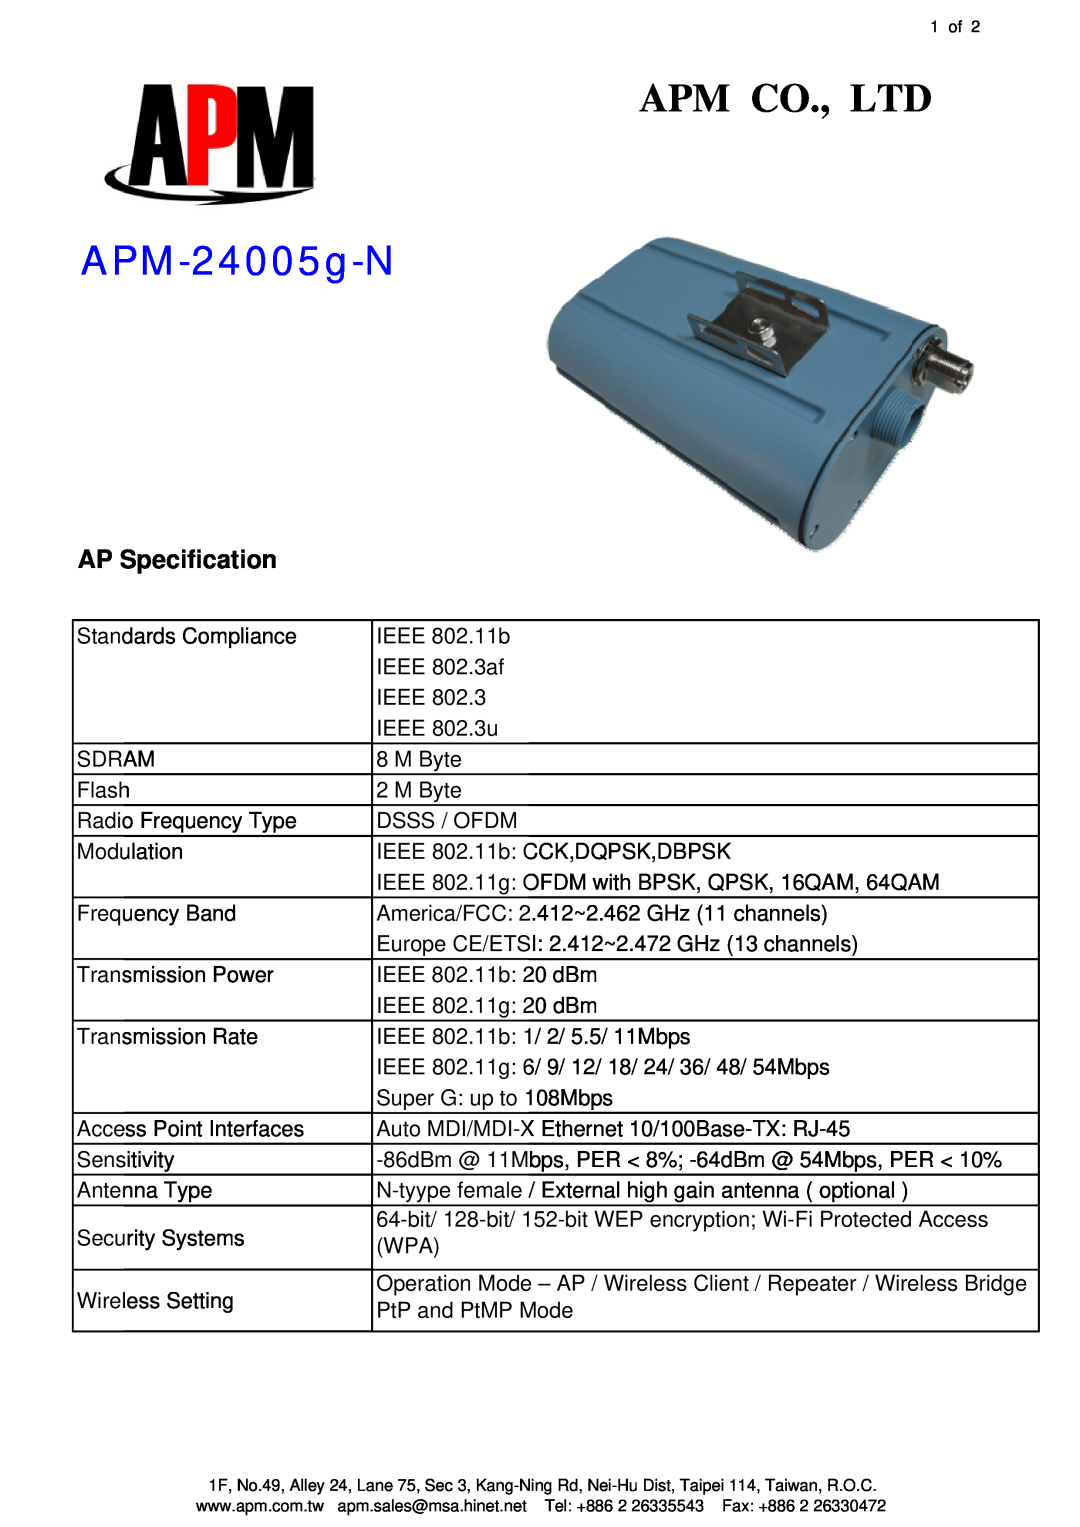 APM 2400G-N specifications APM-24005g-N, AP Specification 